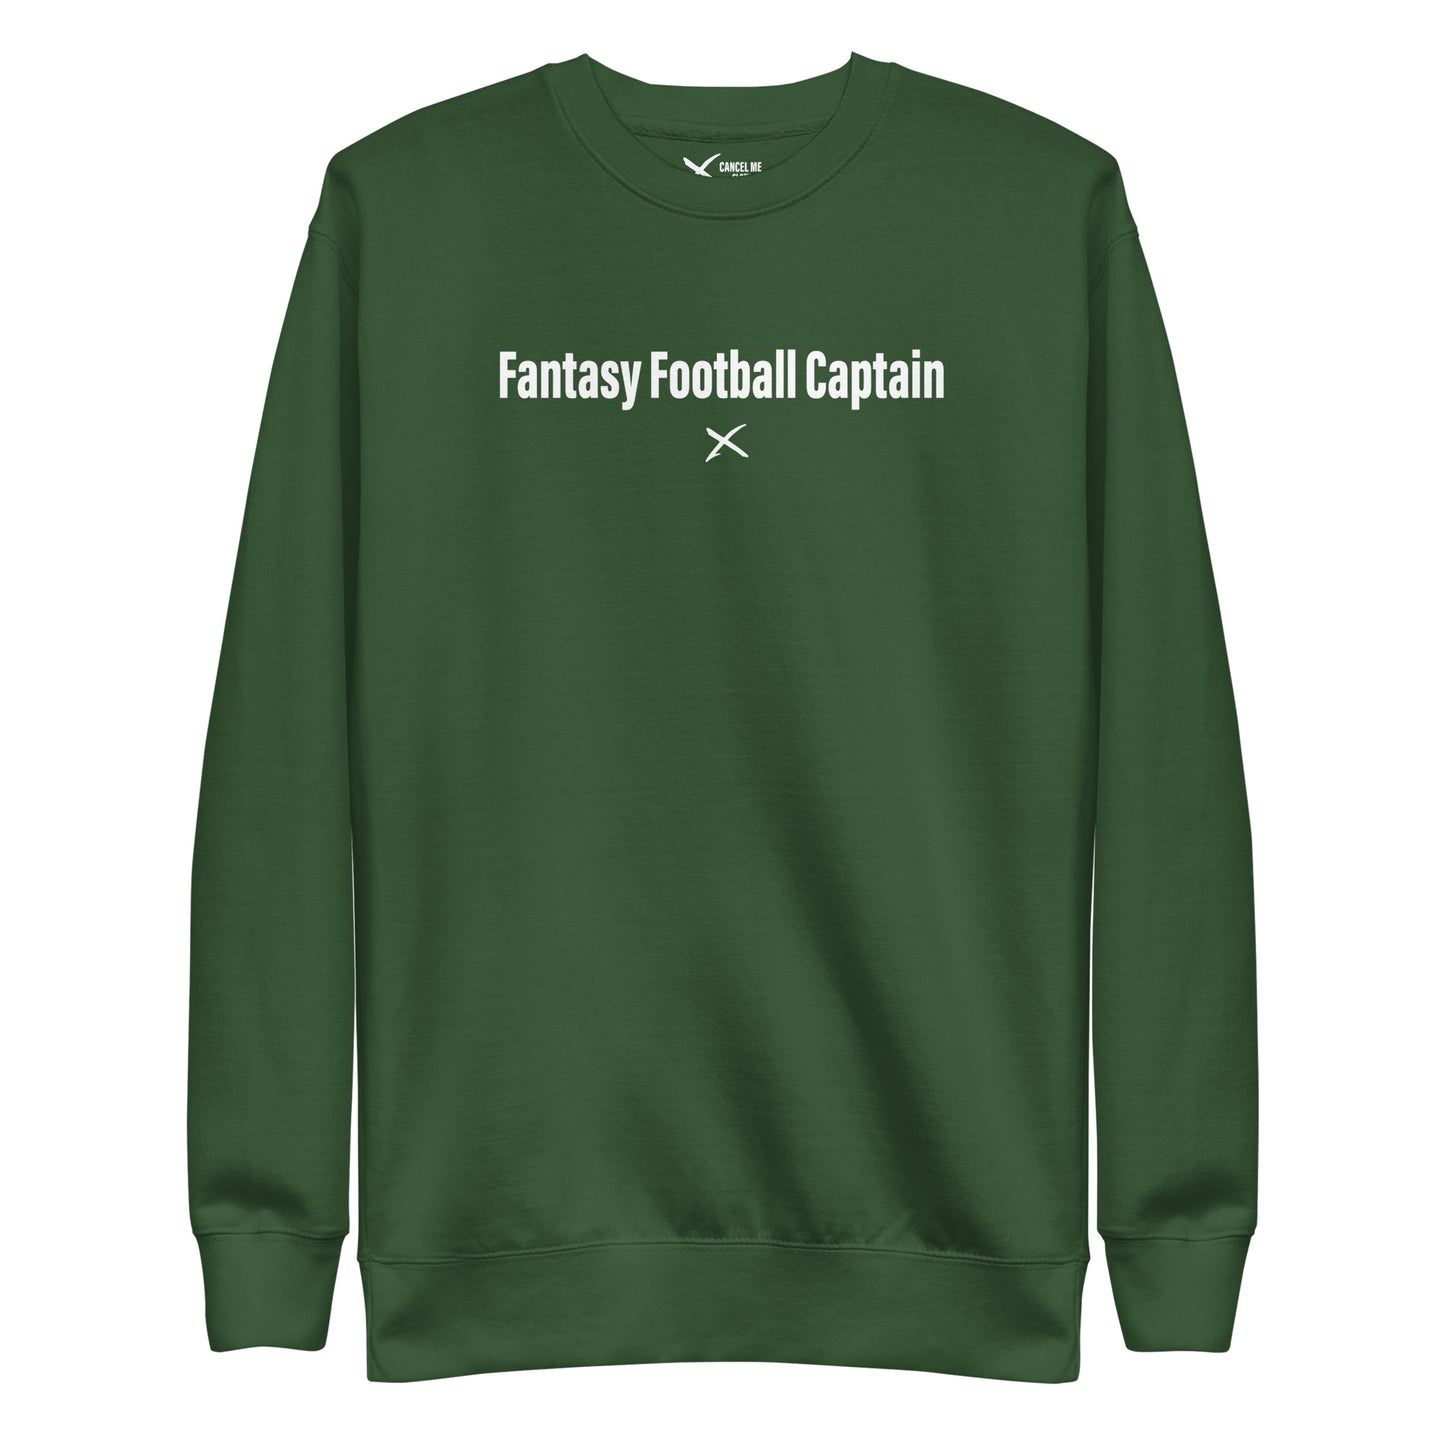 Fantasy Football Captain - Sweatshirt